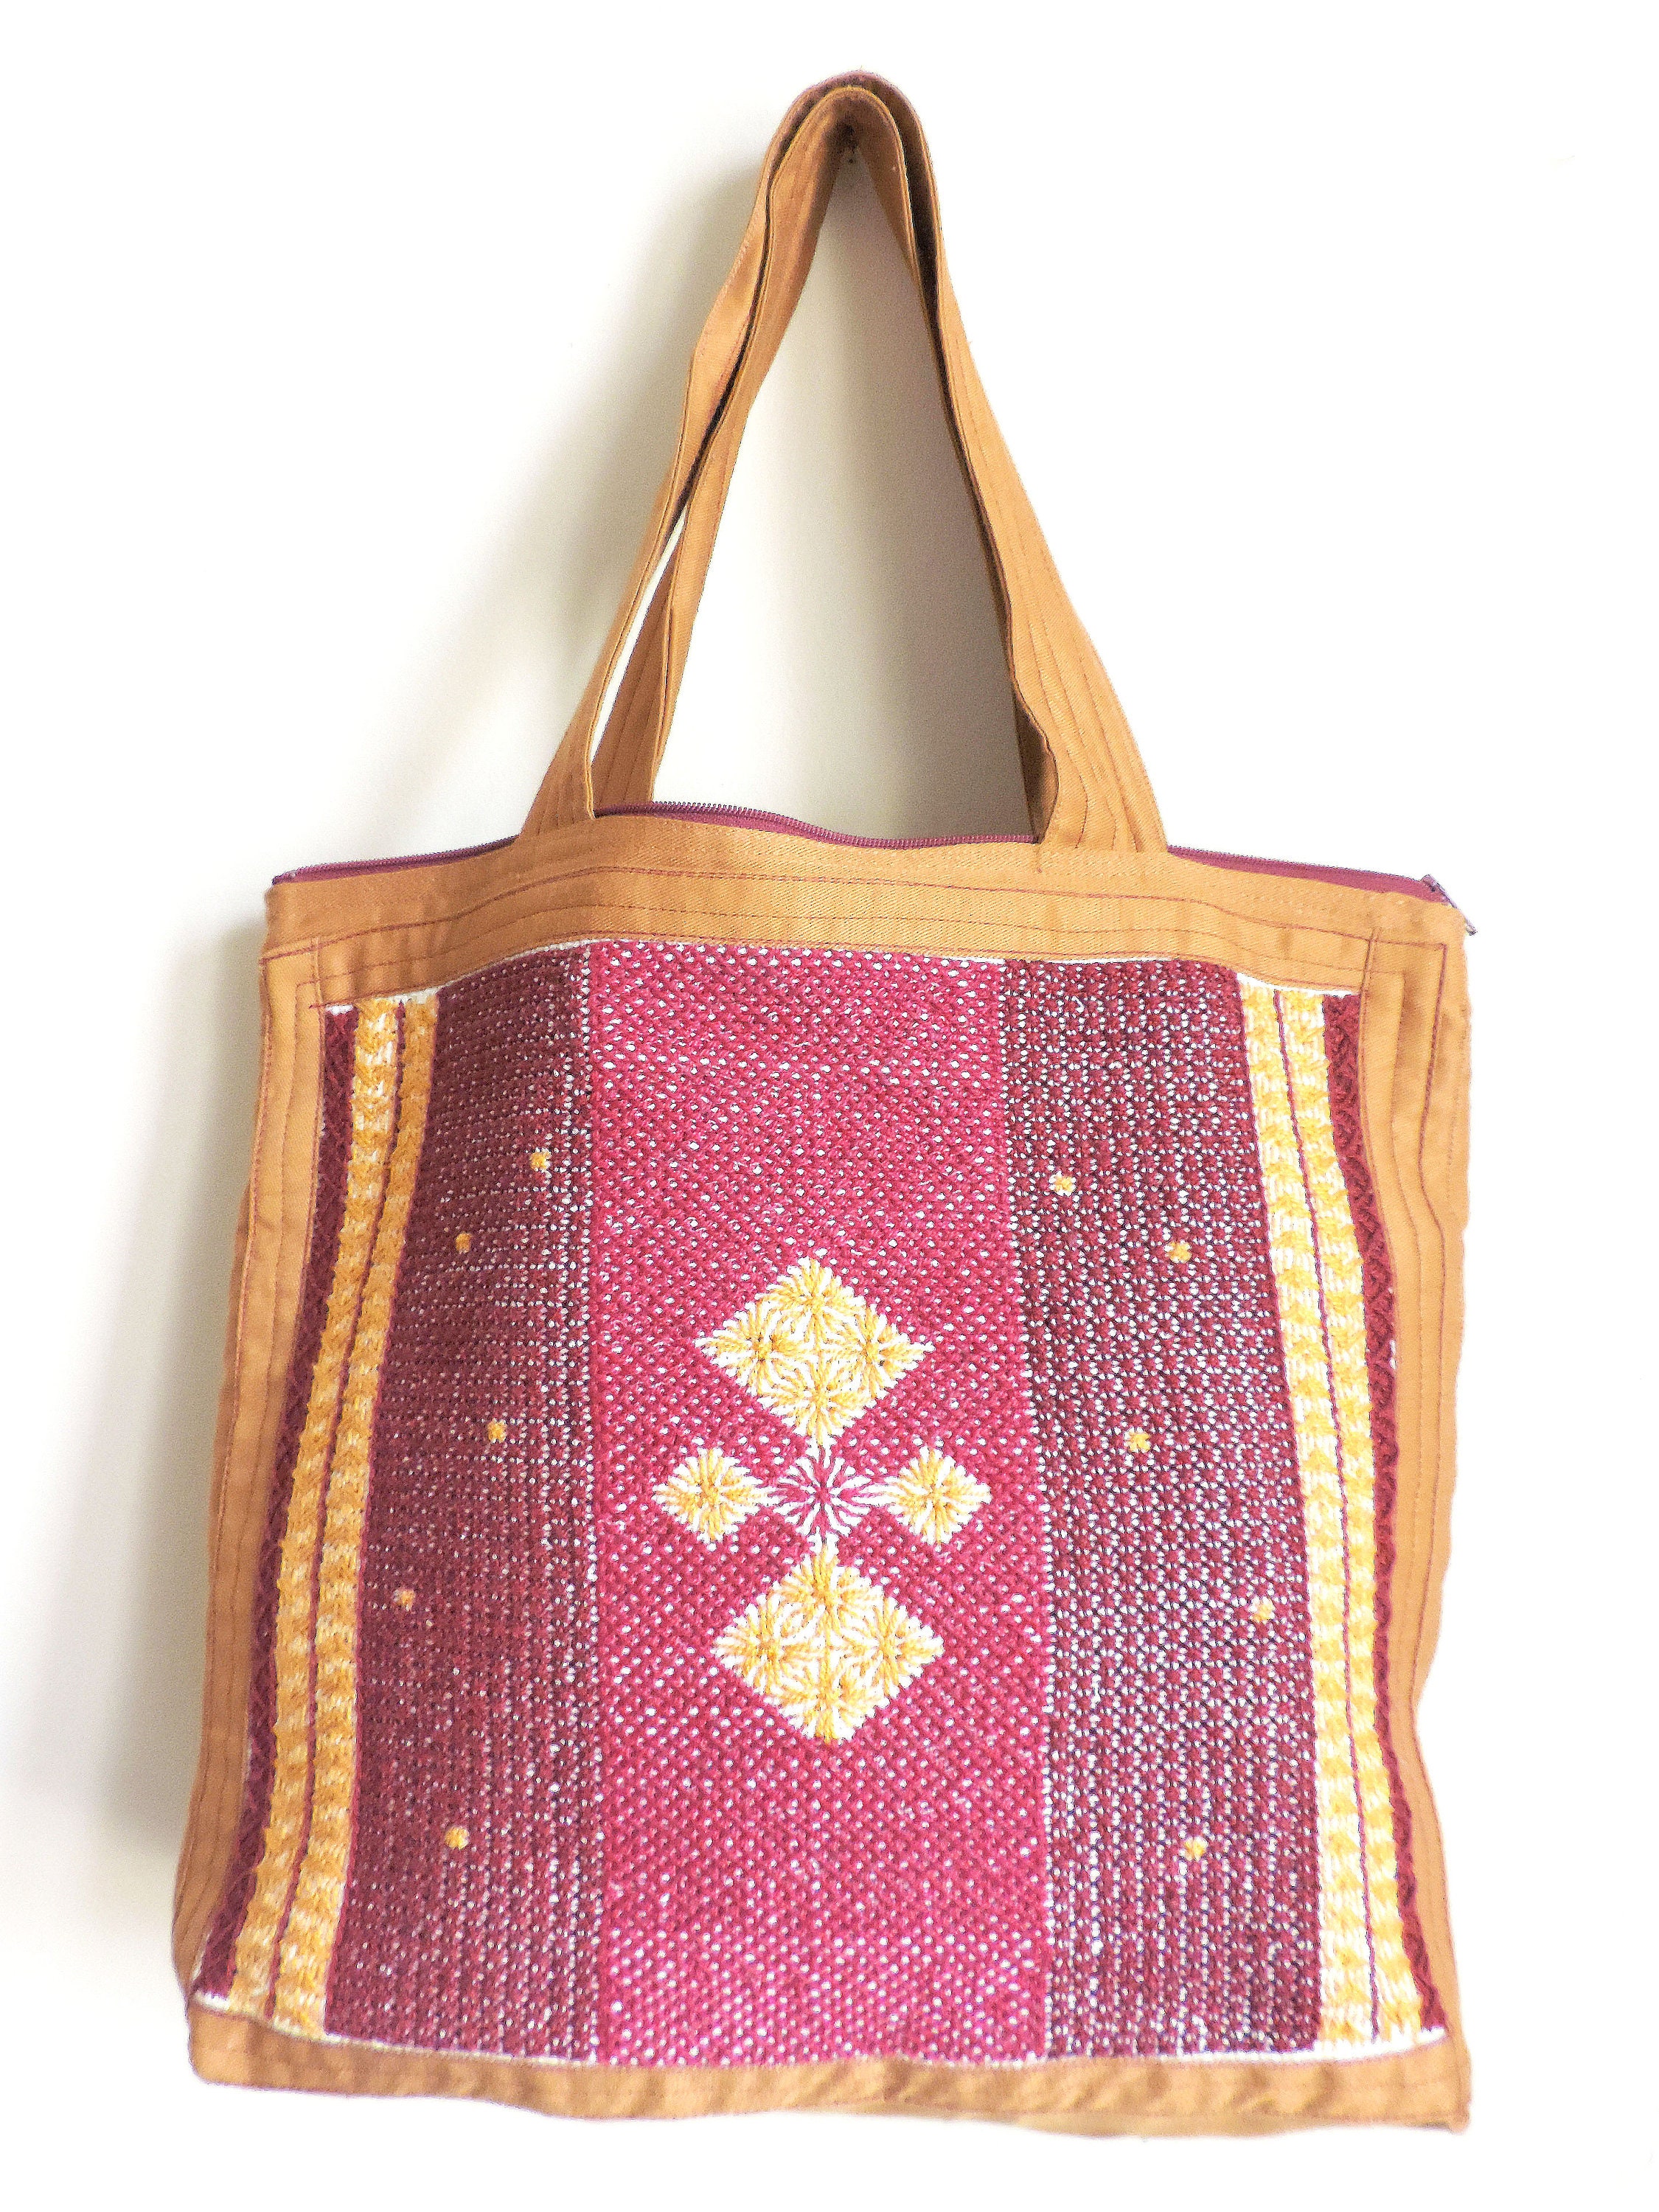 Embroidery Bag Small Tote Bag Fabric Tote Bag Beach Bag | Etsy